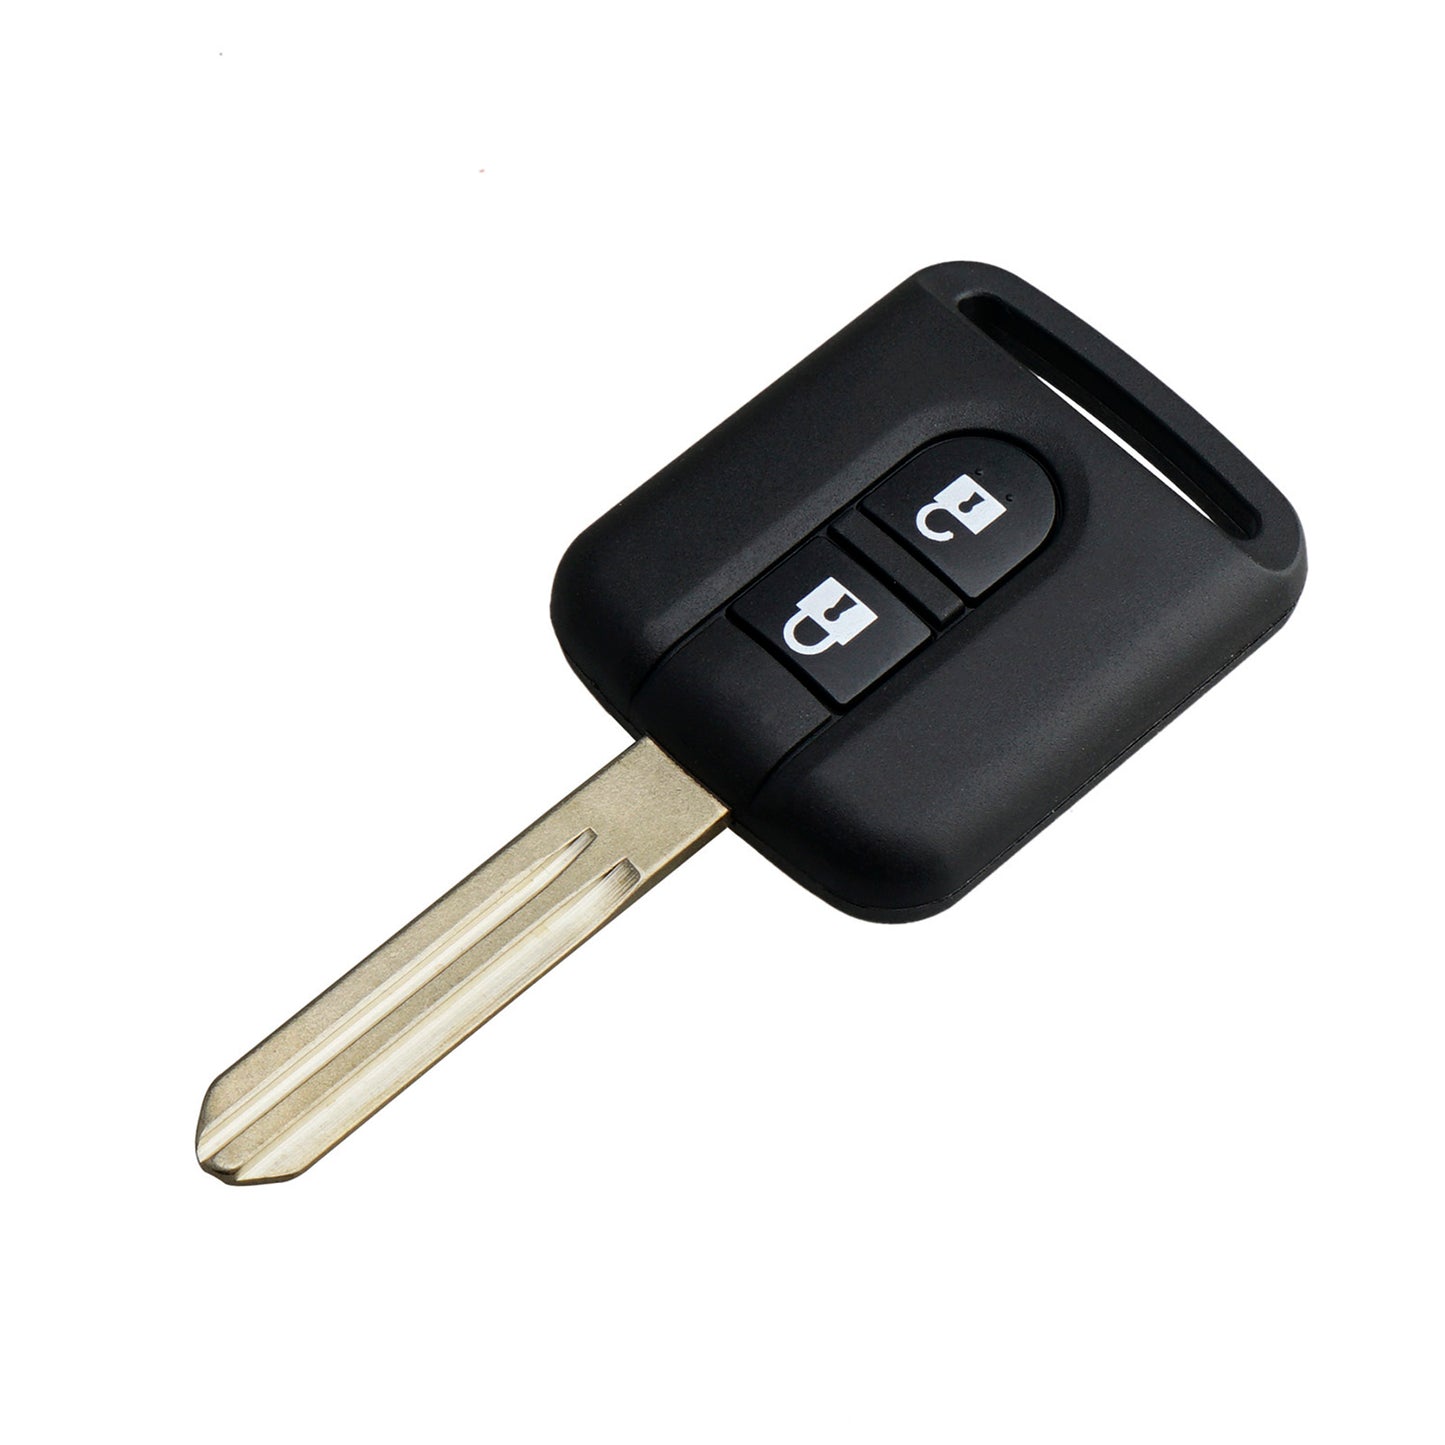 2 buttons 433MHz Keyless Entry Fob Remote Car Key For 2006-2016 Nissan Micra K12 Navara D40M nota E11 Qashqai J10 Cabstar patrulla Pathfinder Nissan x-trail T31 FCC ID : 5WK4876 SKU:J191